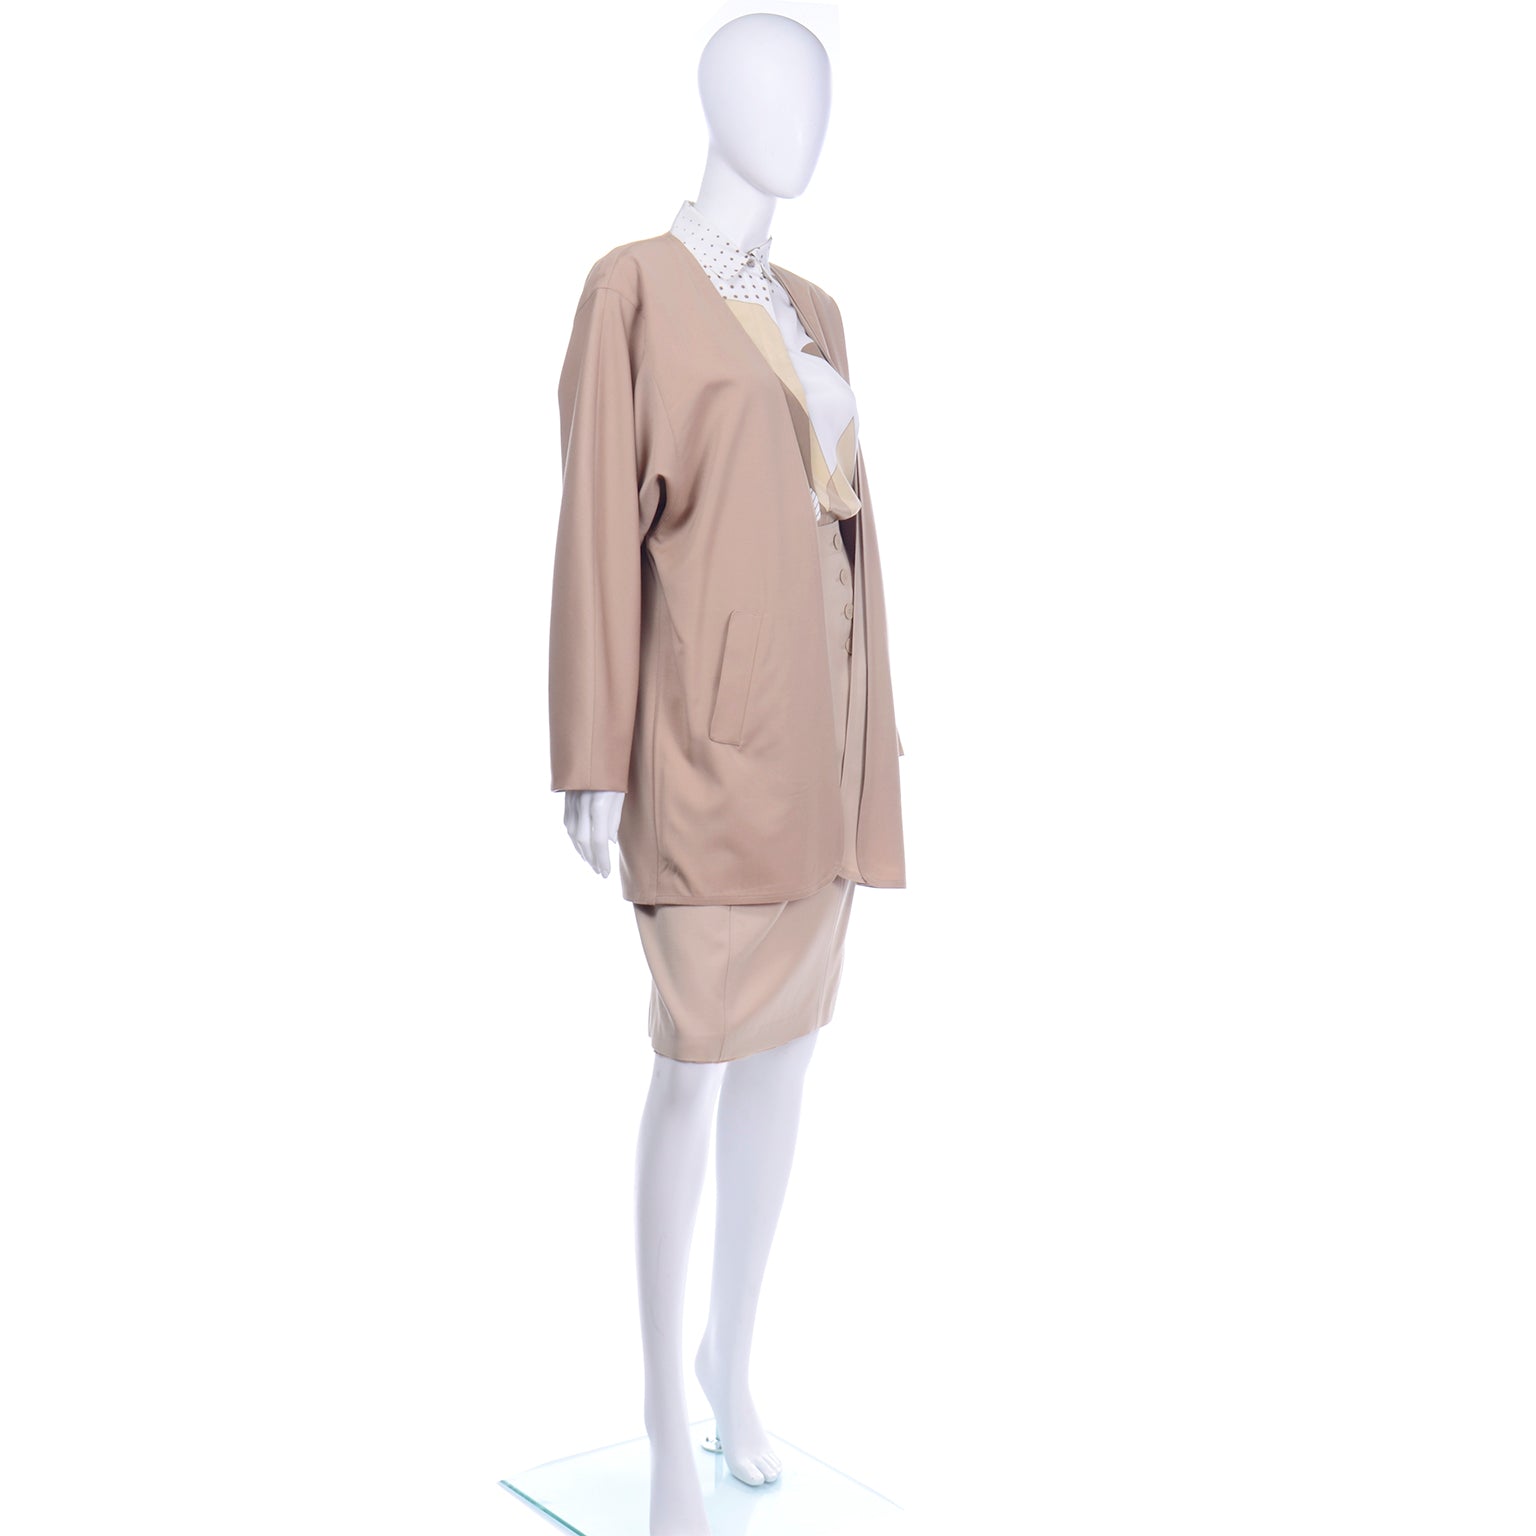 Louis Feraud 1980s Vintage Skirt Jacket and Blouse Suit